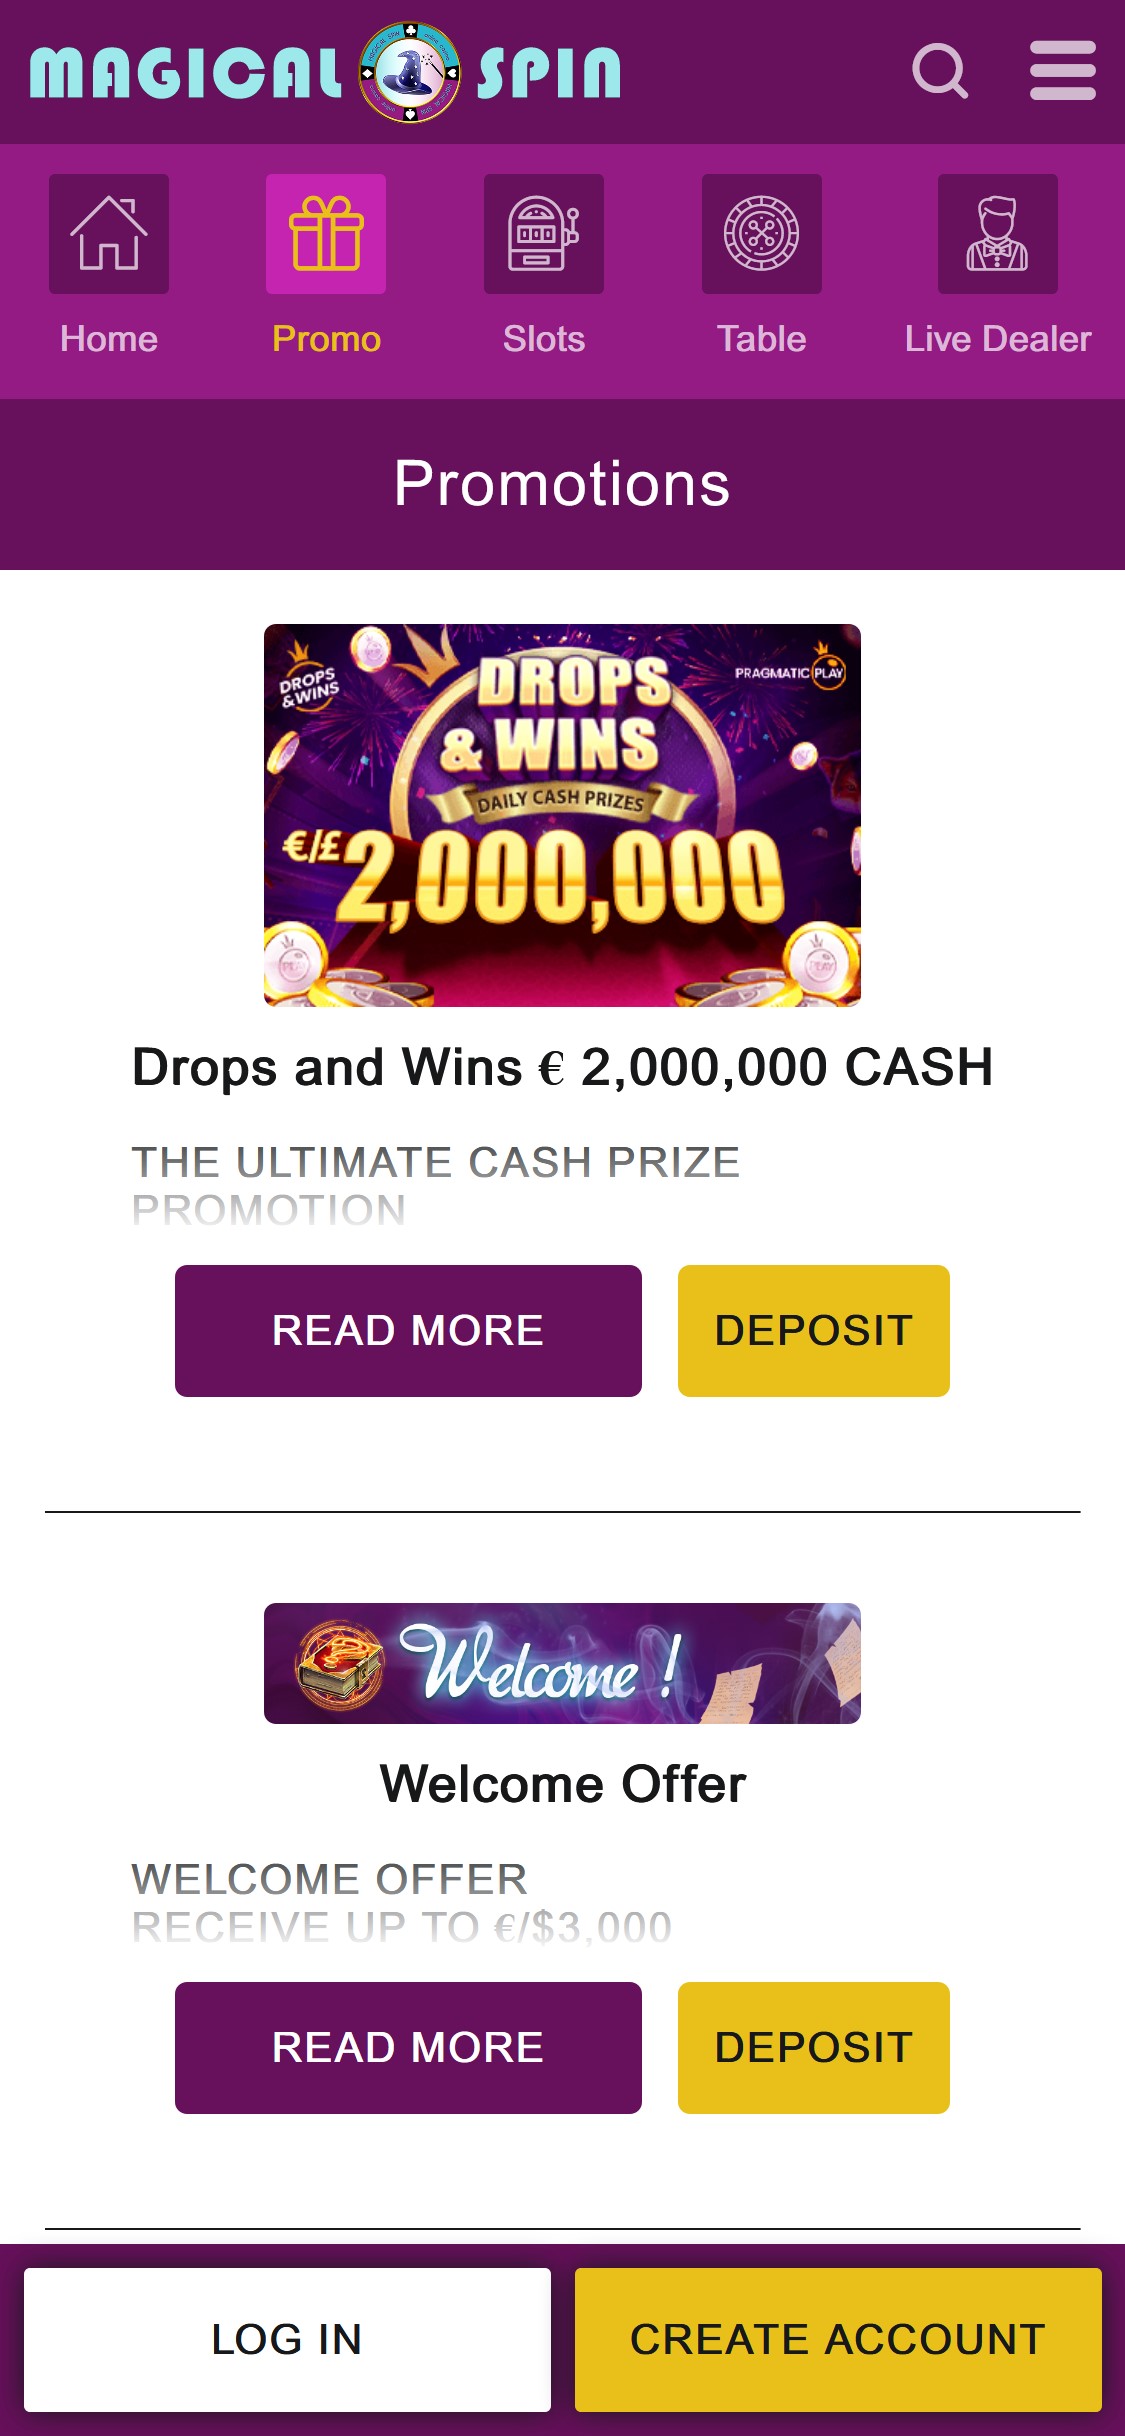 Magical Spin Casino Mobile No Deposit Bonus Review